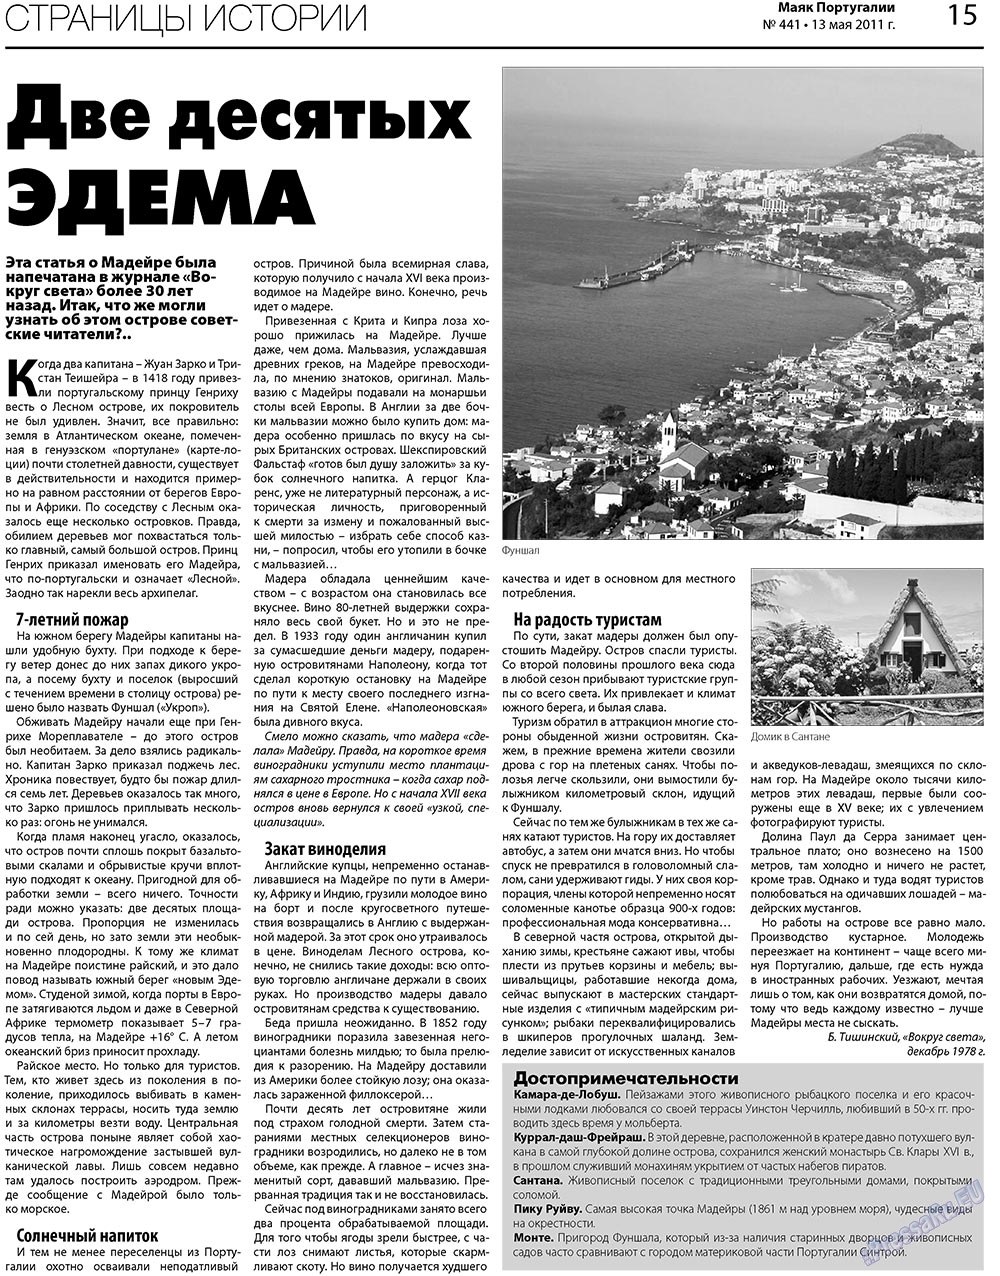 Маяк Португалии, газета. 2011 №441 стр.15